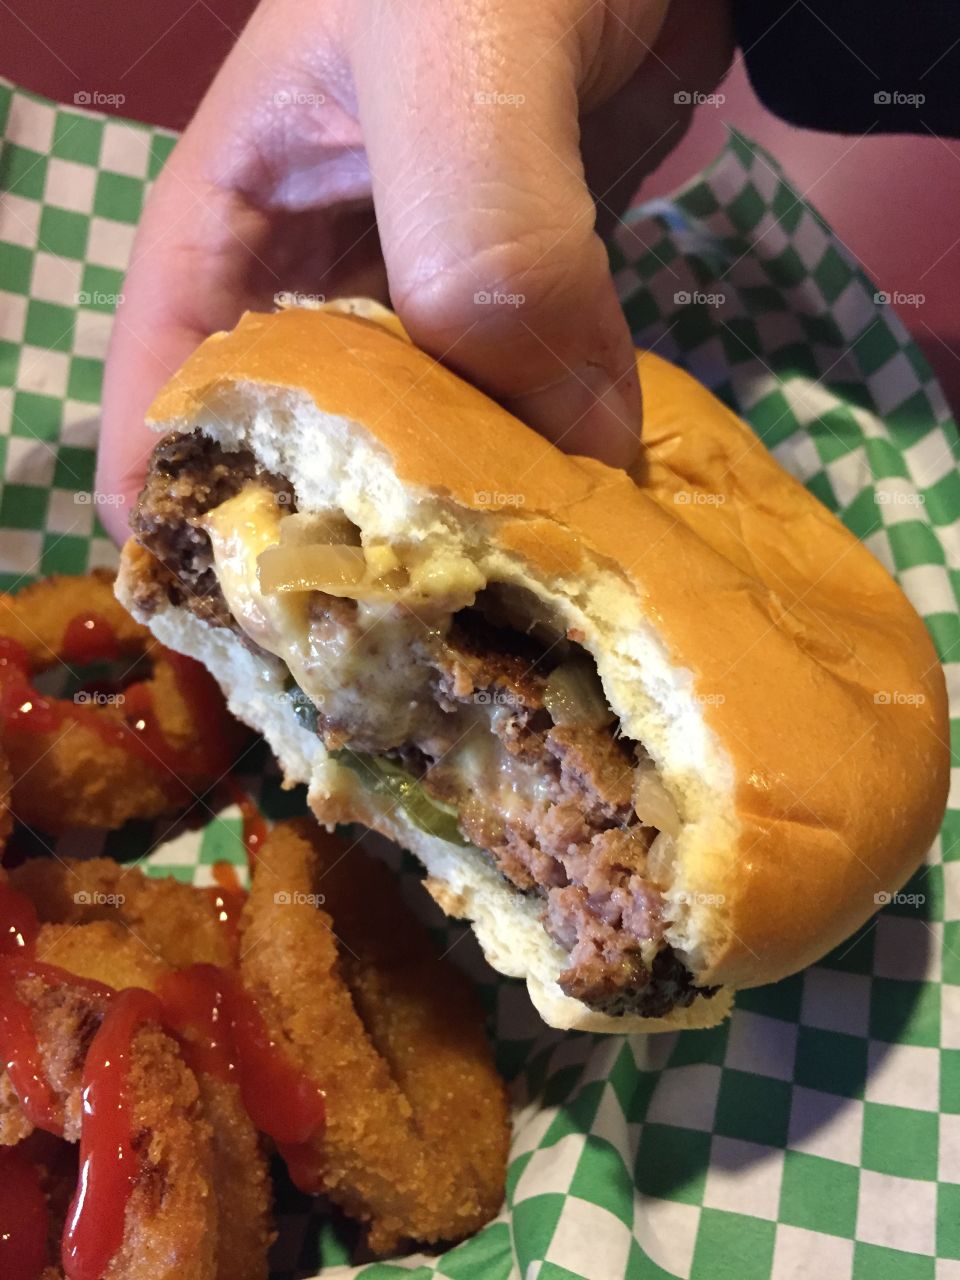 Minneapolis' own "Juicy Lucy" Burger